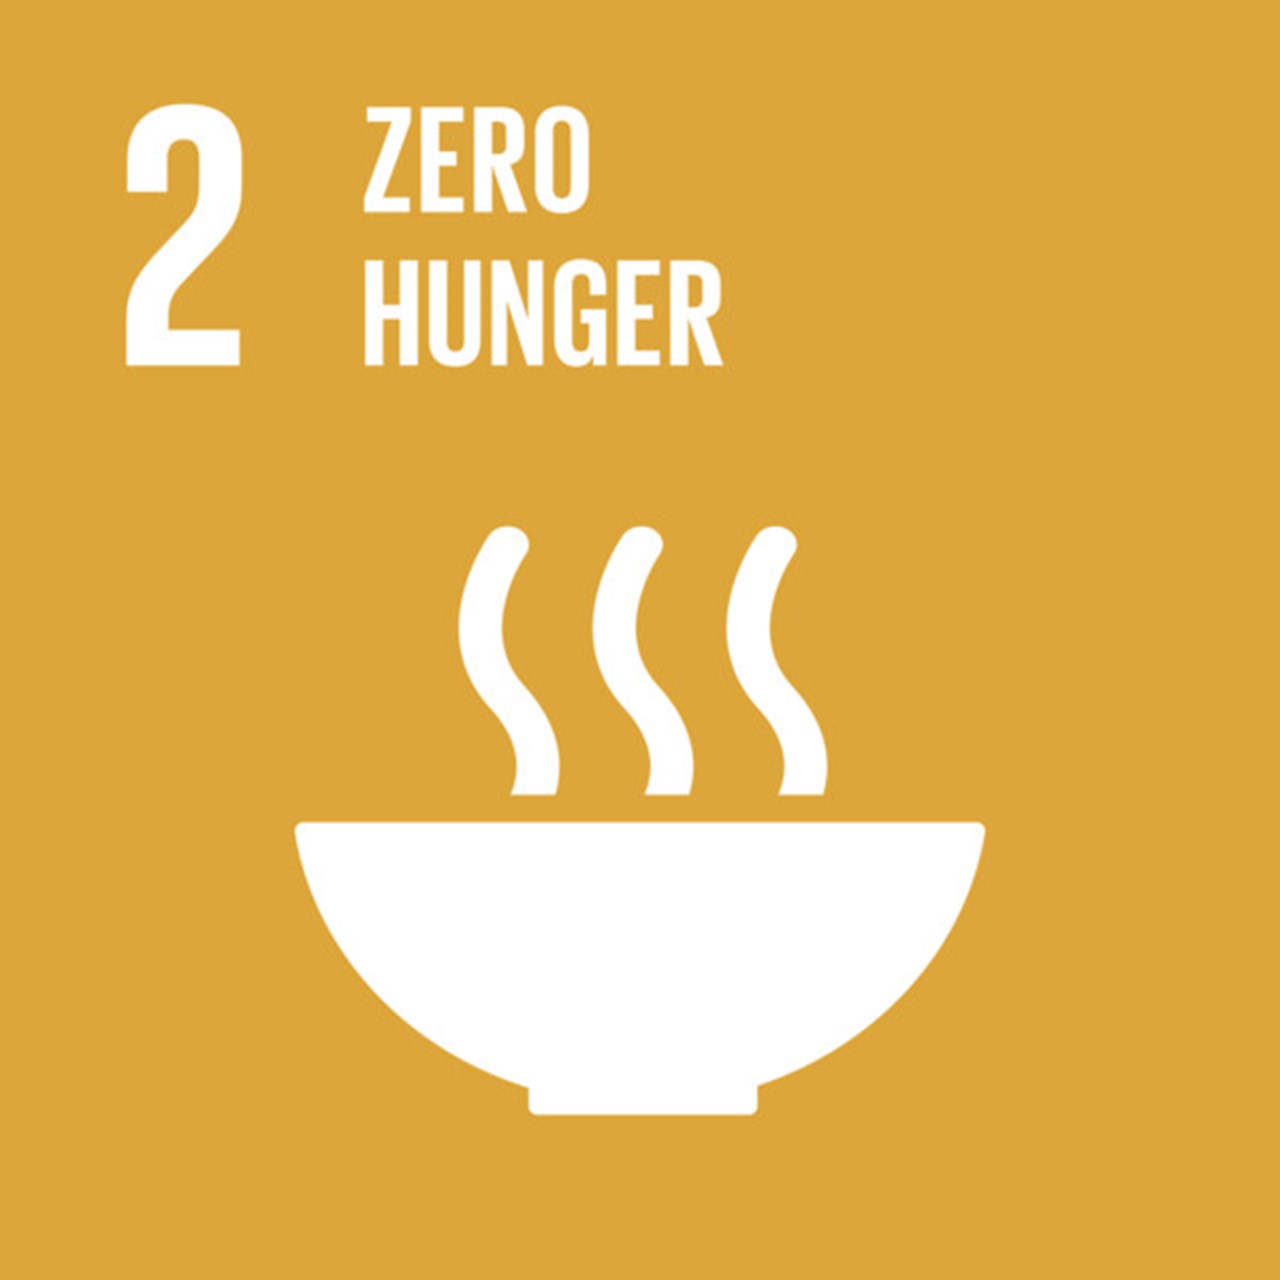 The Global Goals, Goal 2 - Zero Hunger